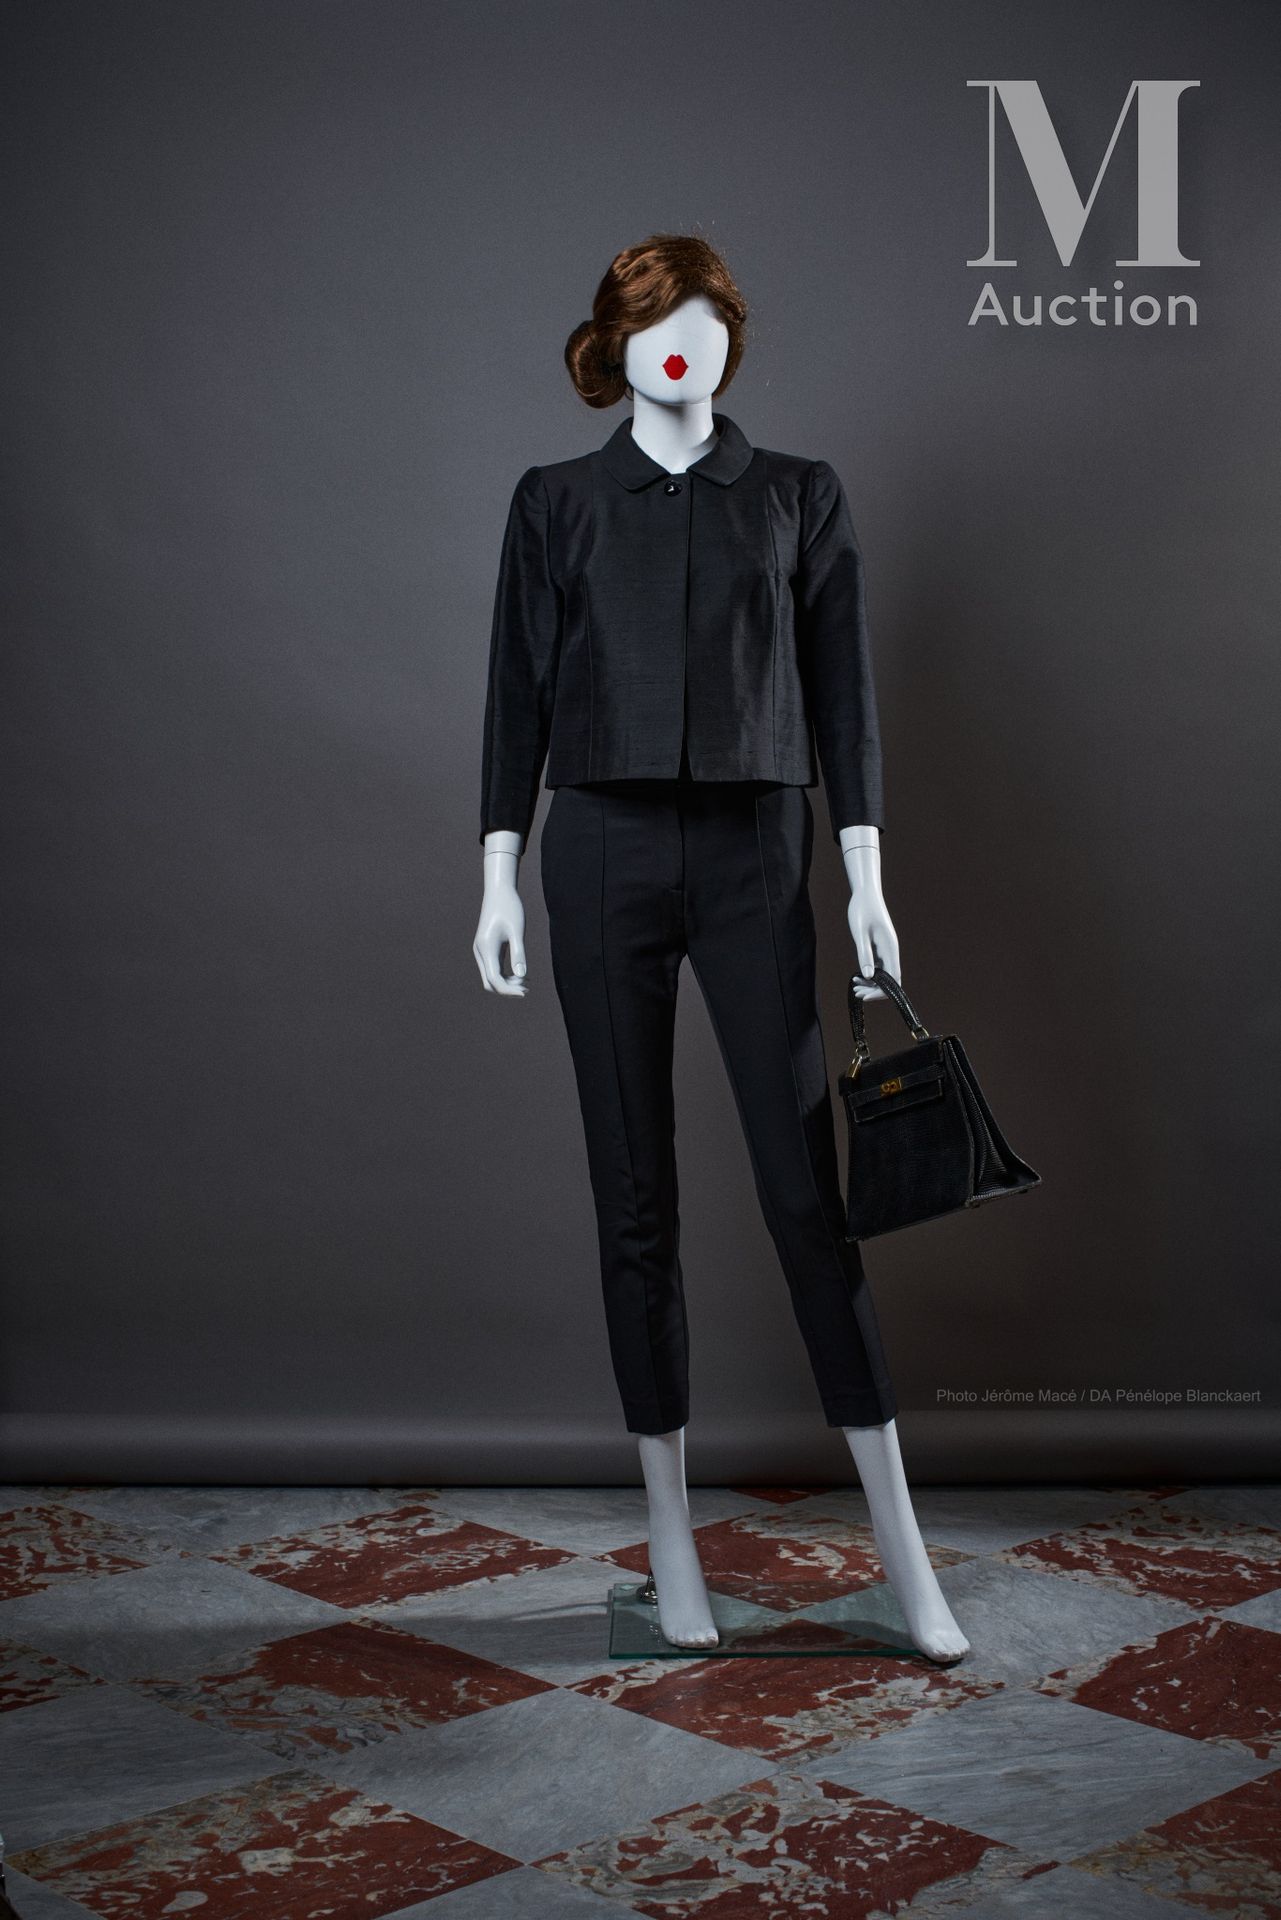 LANVIN (HAUTE COUTURE) - 1950/60'S 衣服

黑色的丝质衬衫，一颗颗喷射状的纽扣

黑色标签，白色图案

尺寸：约为S